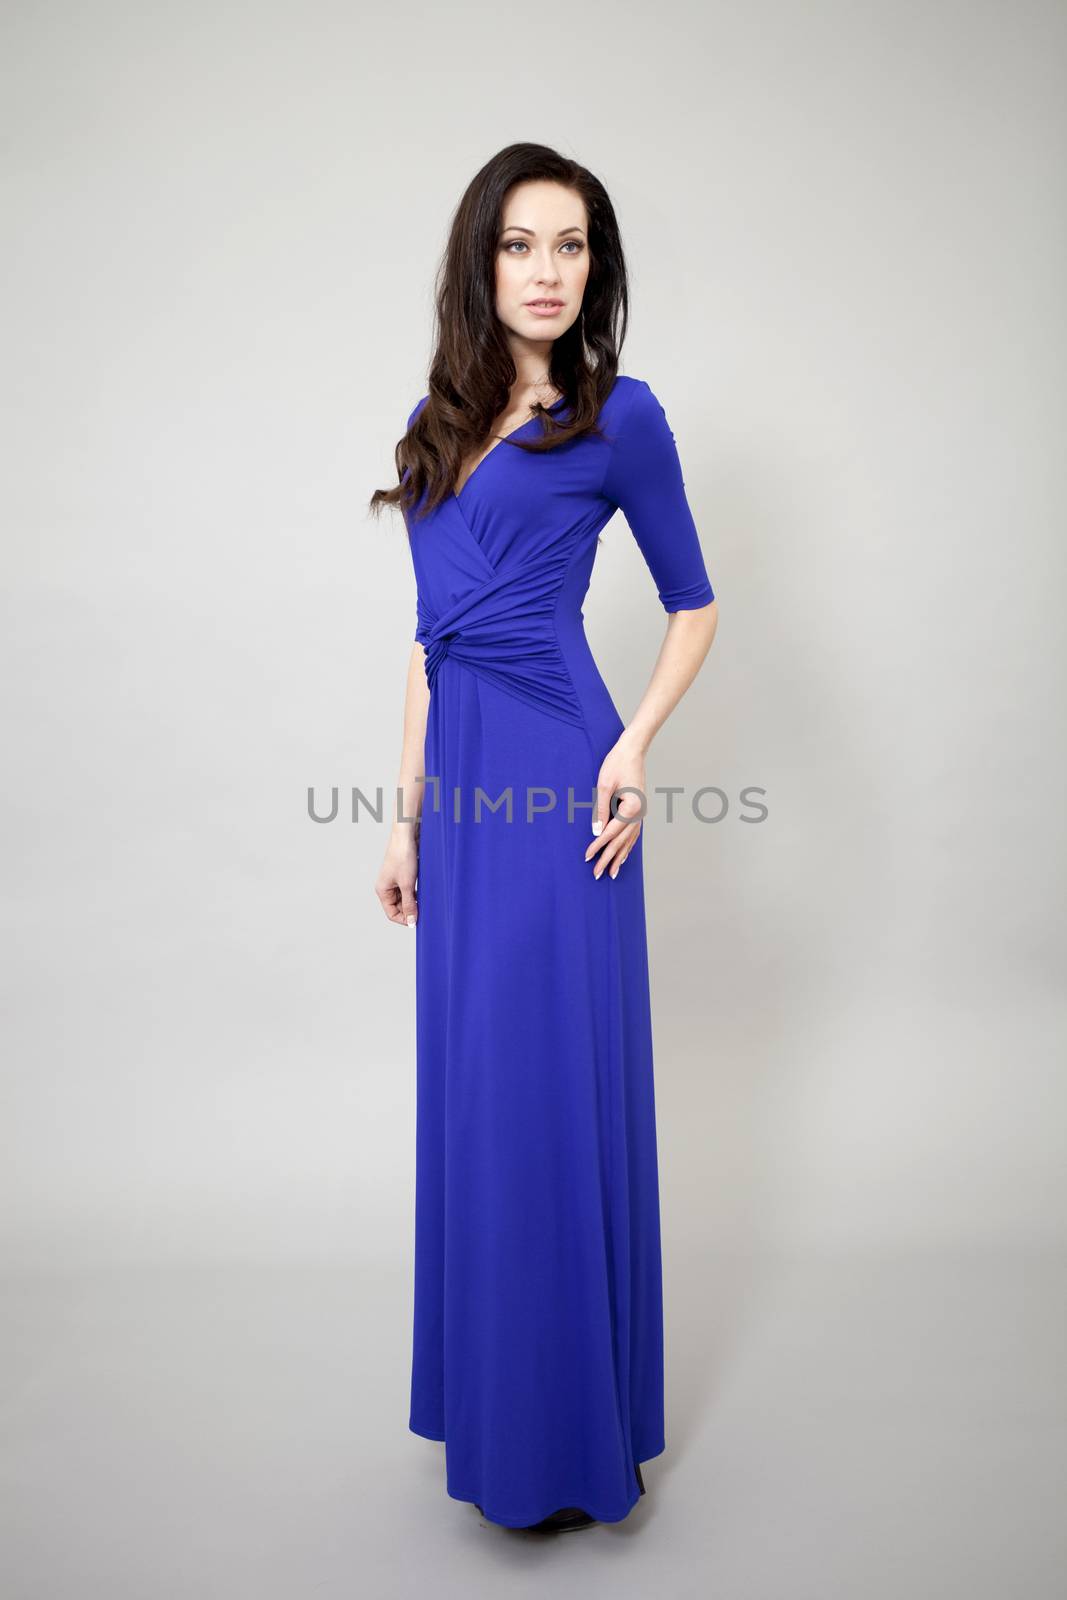 Fashion model in long blue dress by andersonrise